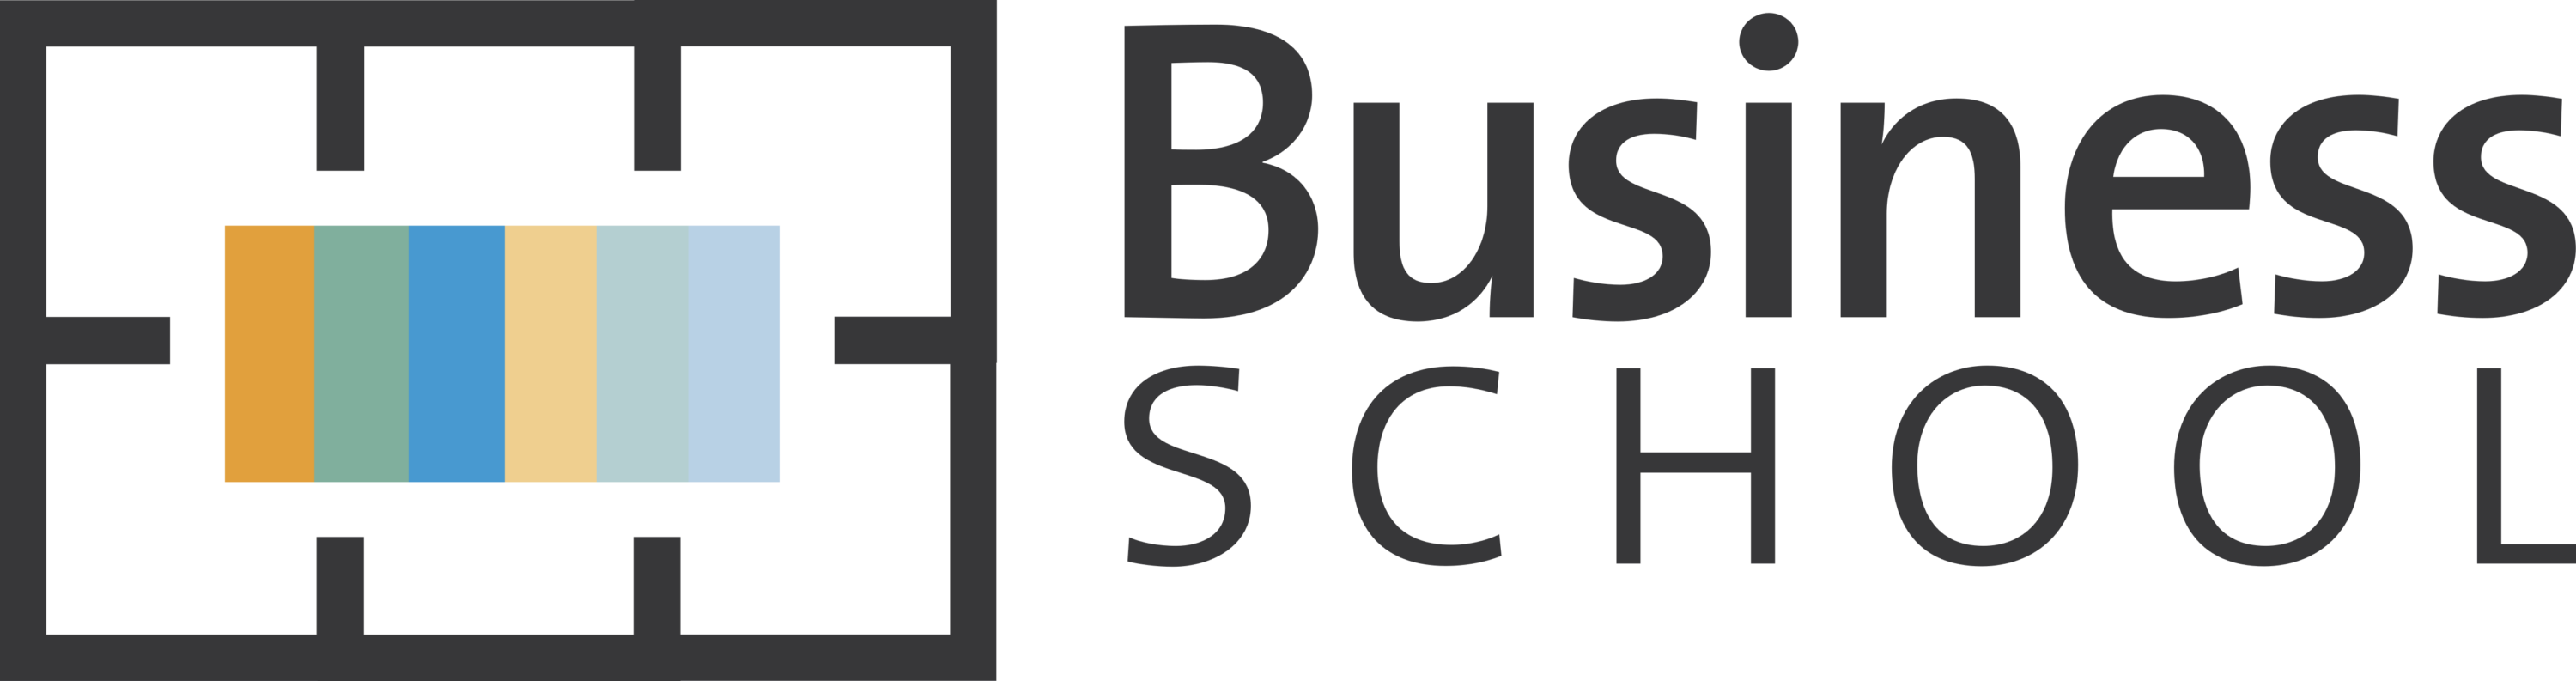 Business School Logo